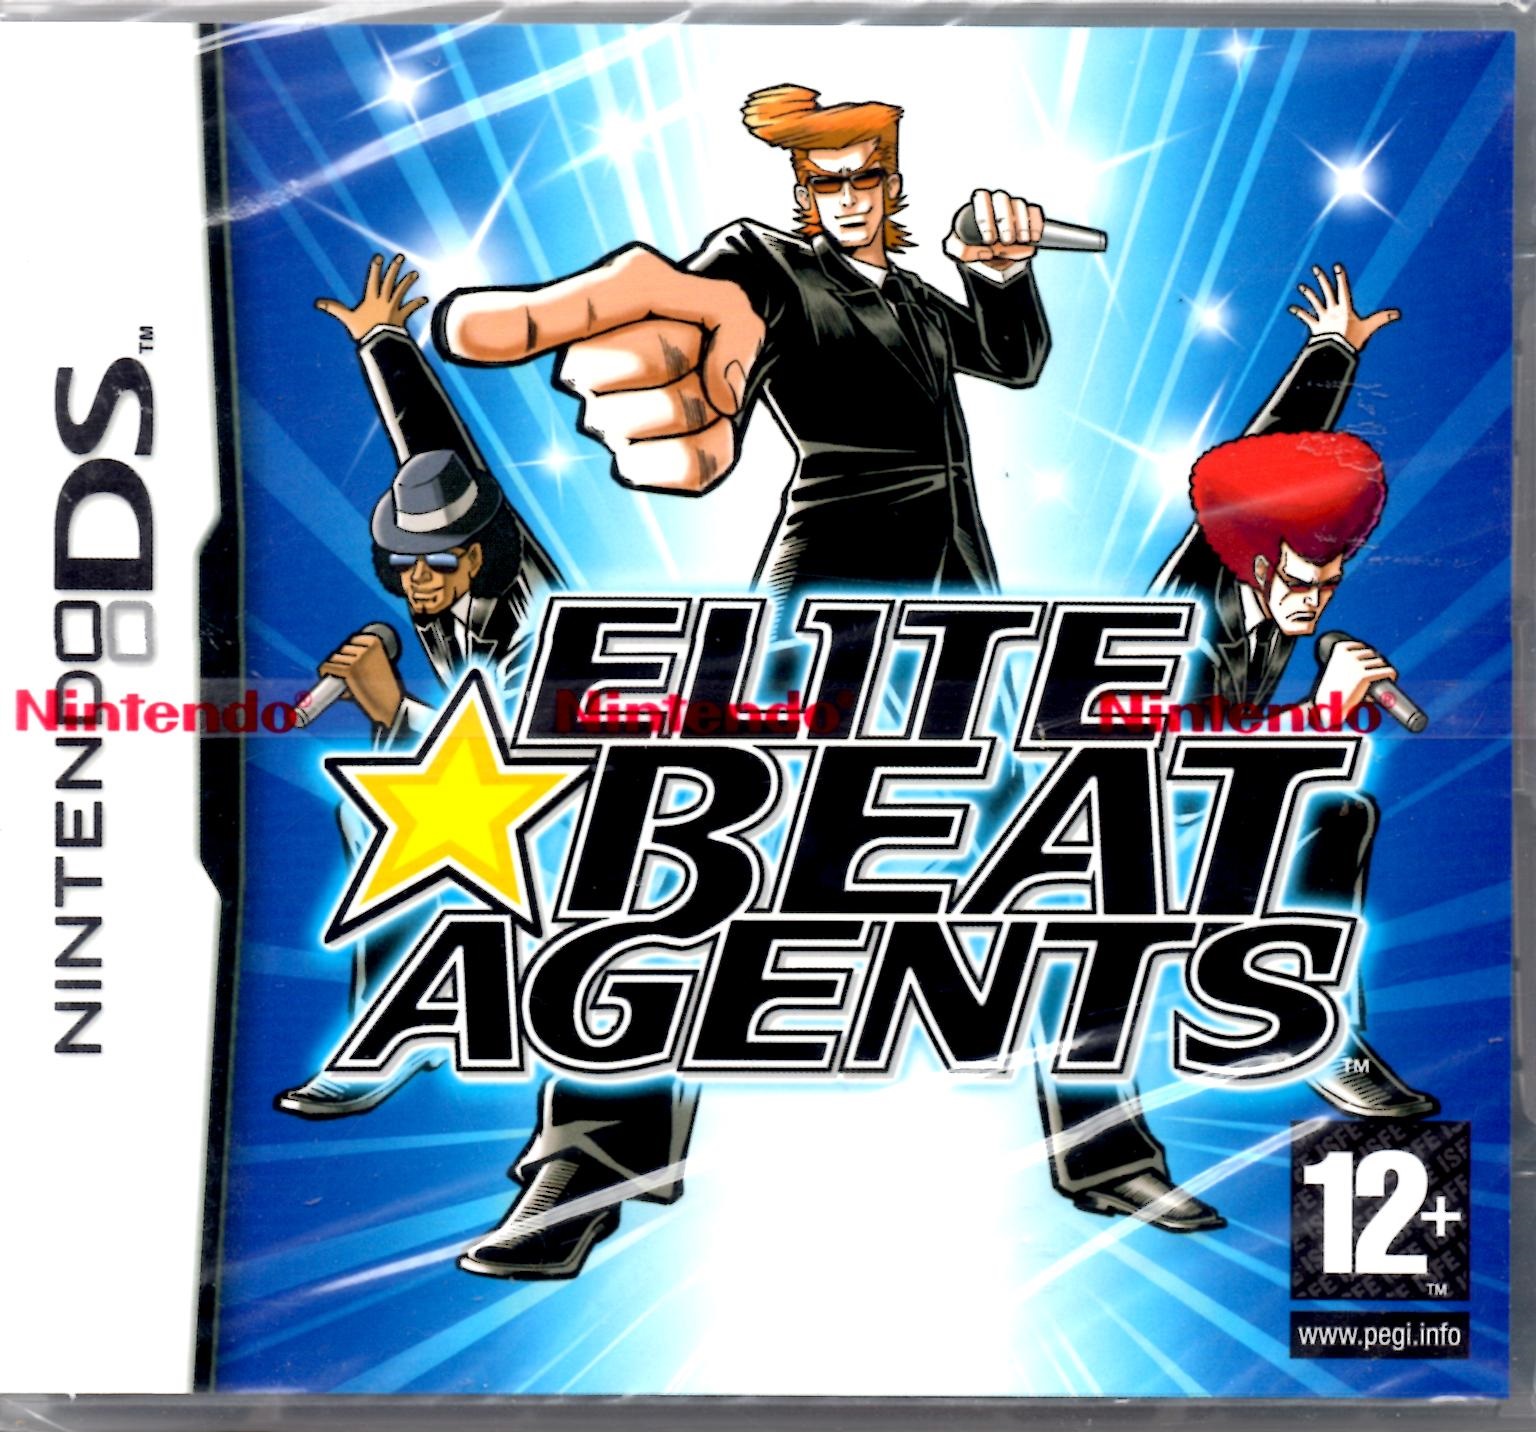 Nintendo elite. Elite Beat agents. Elite Beat agents (DS). Elite Beat agents DS ROM. Elite Beat agents/Ouendan.